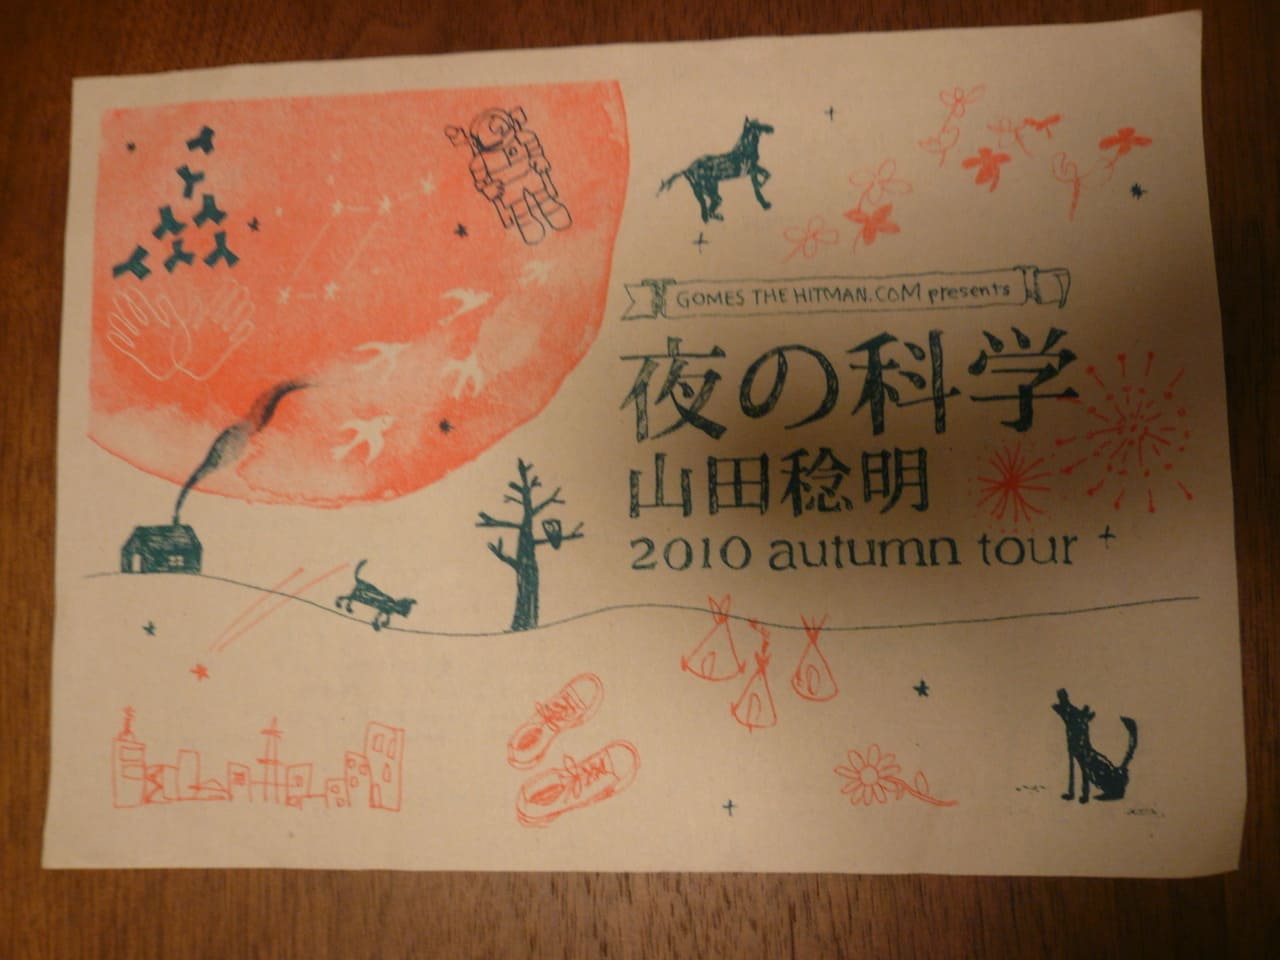 山田稔明 夜の科学 2010 autumn tour